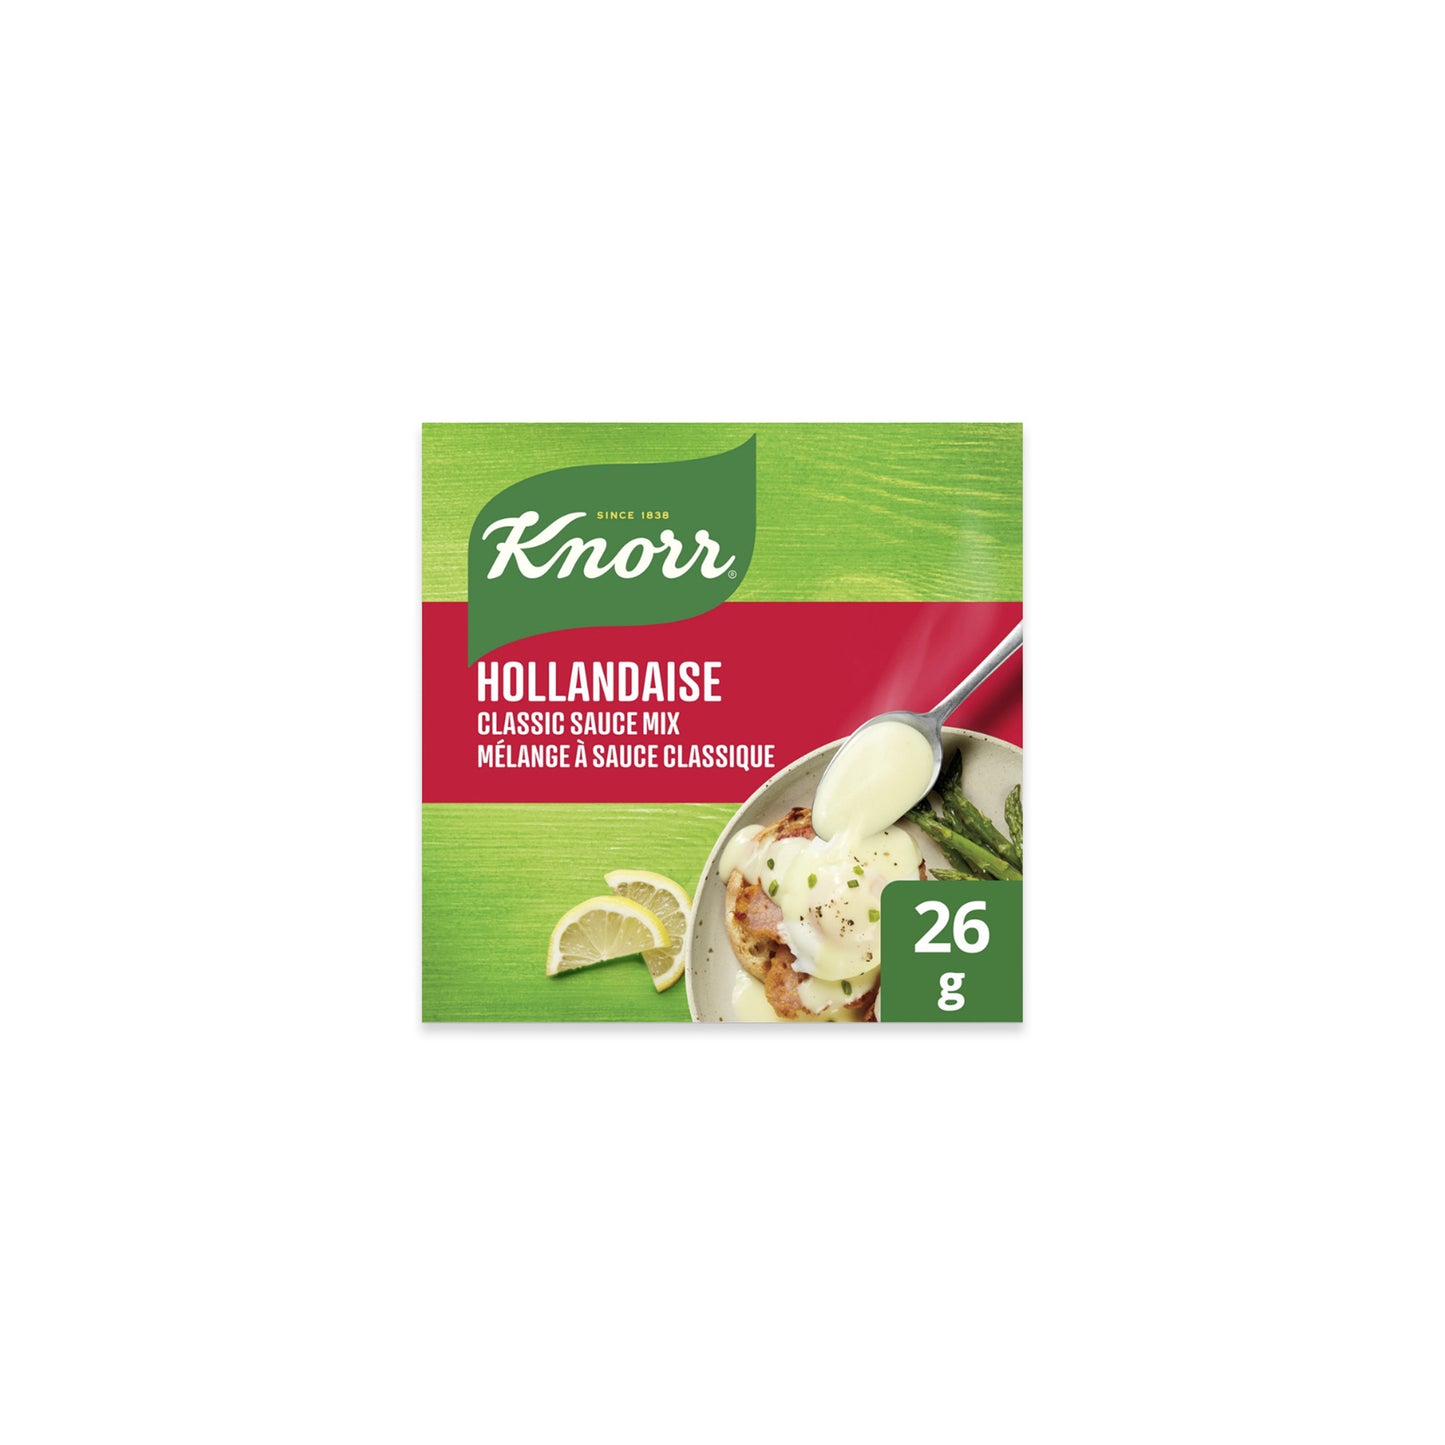 Sauce Mix - Hollandaise (Knorr)